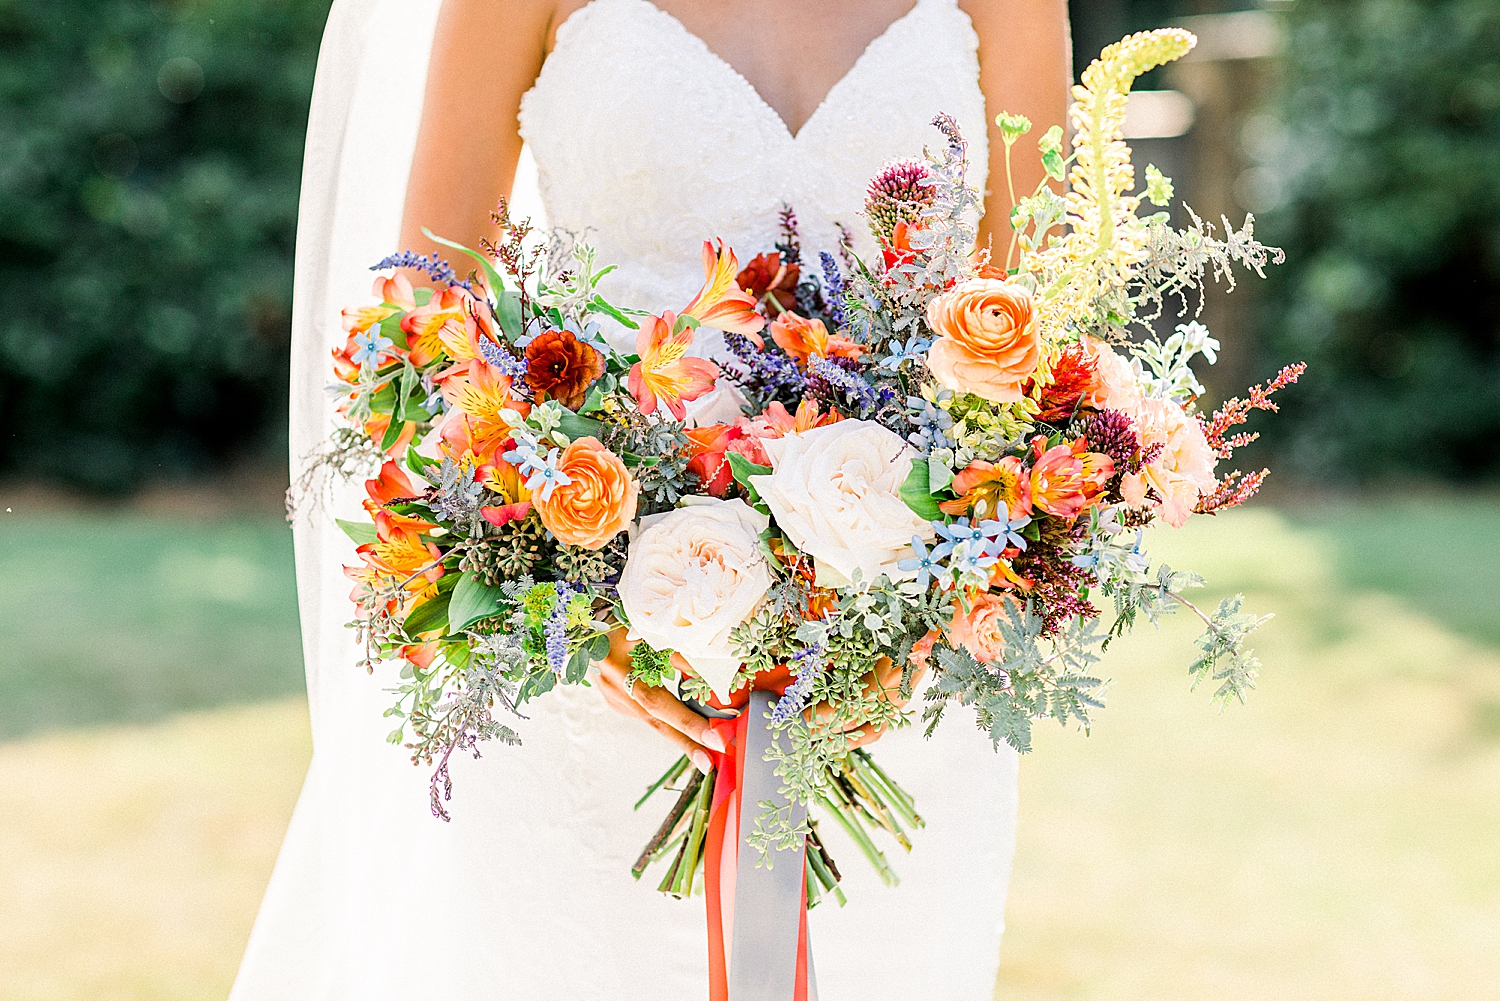 bride's bouquet with bright orange flowers